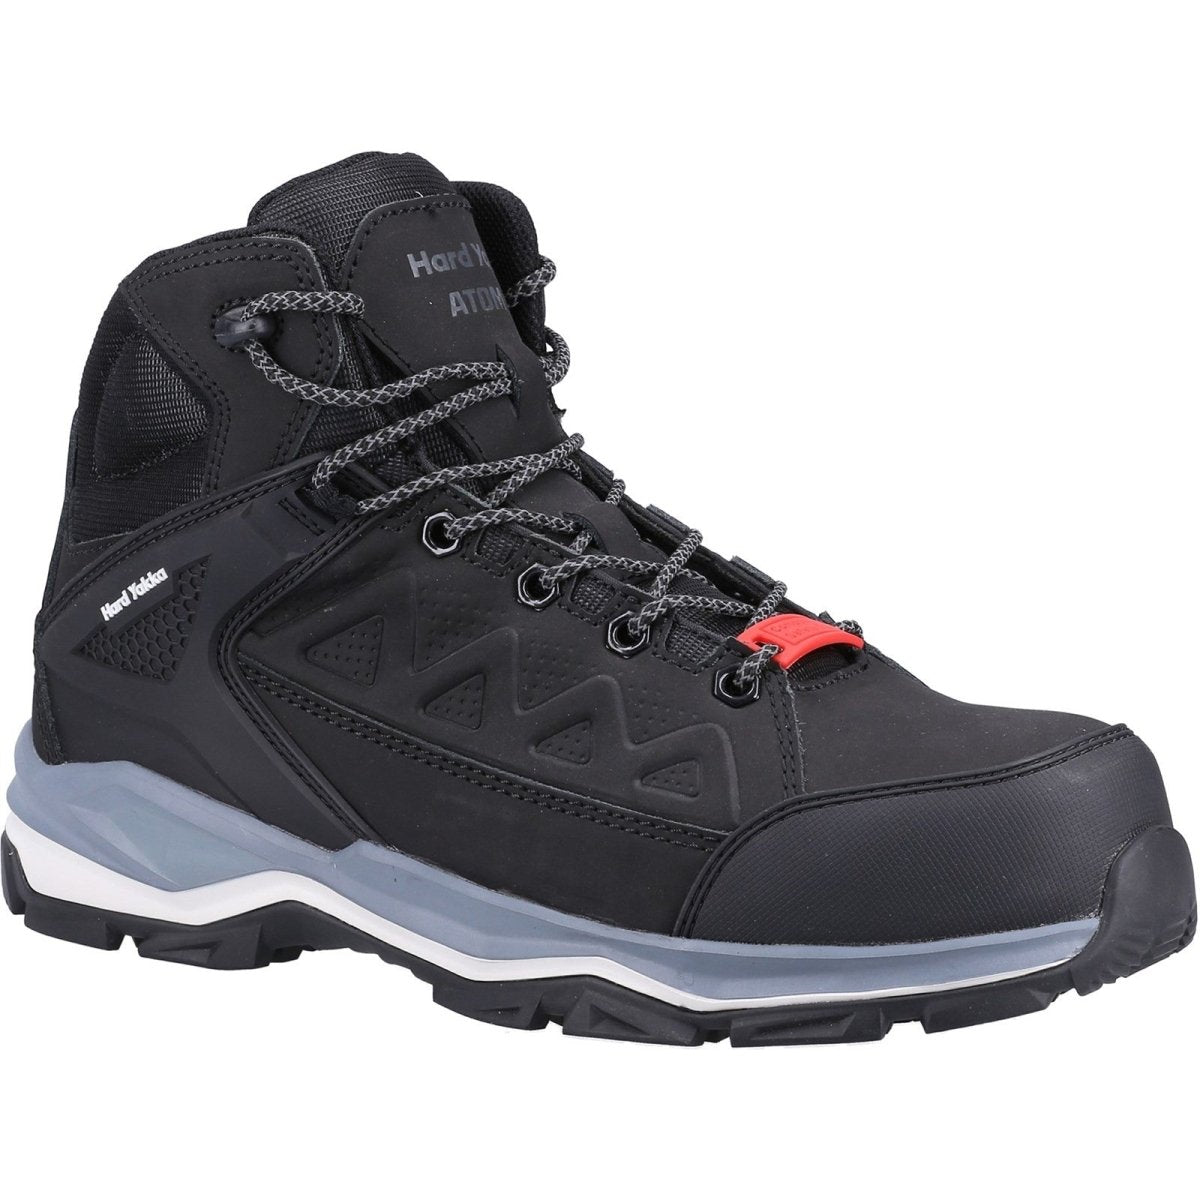 Hard Yakka ATOMIC PR HYBRID Unisex Safety Boots Black 34689 - 59339 - 02 | STB.co.uk